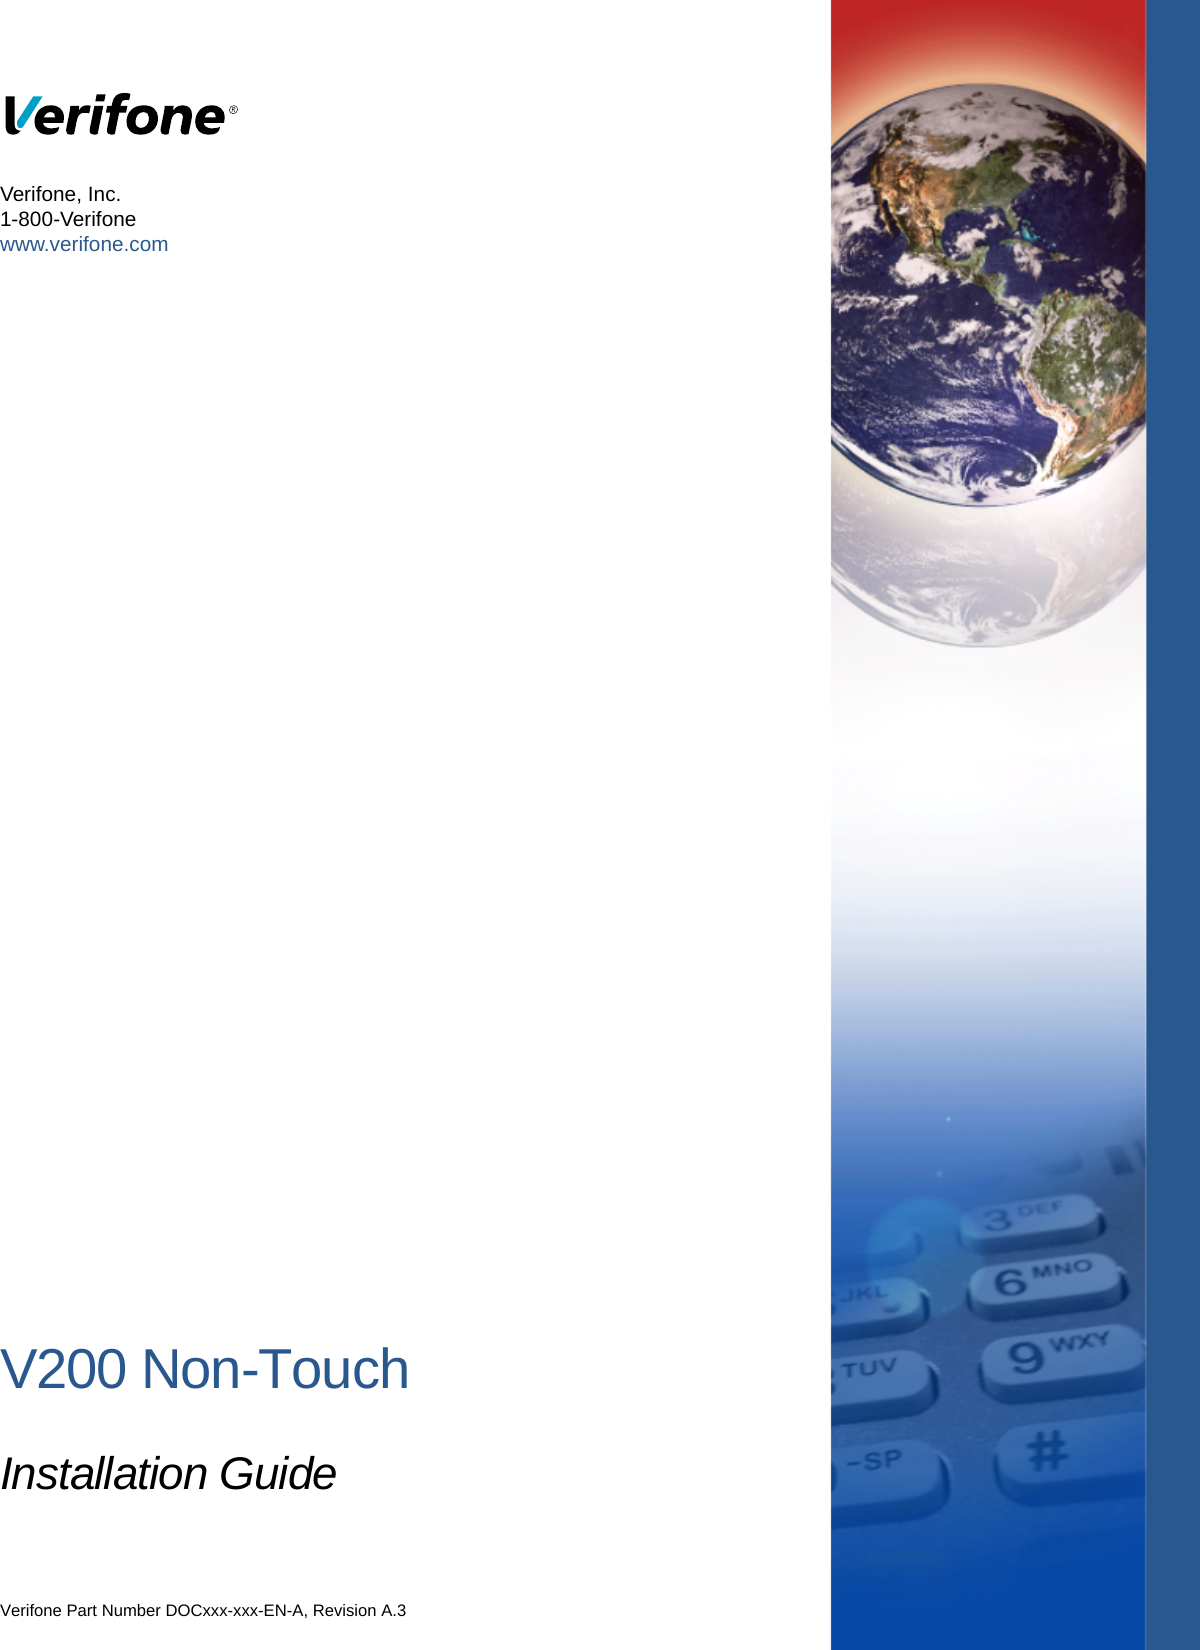 V200 Non-TouchInstallation GuideVerifone Part Number DOCxxx-xxx-EN-A, Revision A.3Verifone, Inc.1-800-Verifonewww.verifone.com